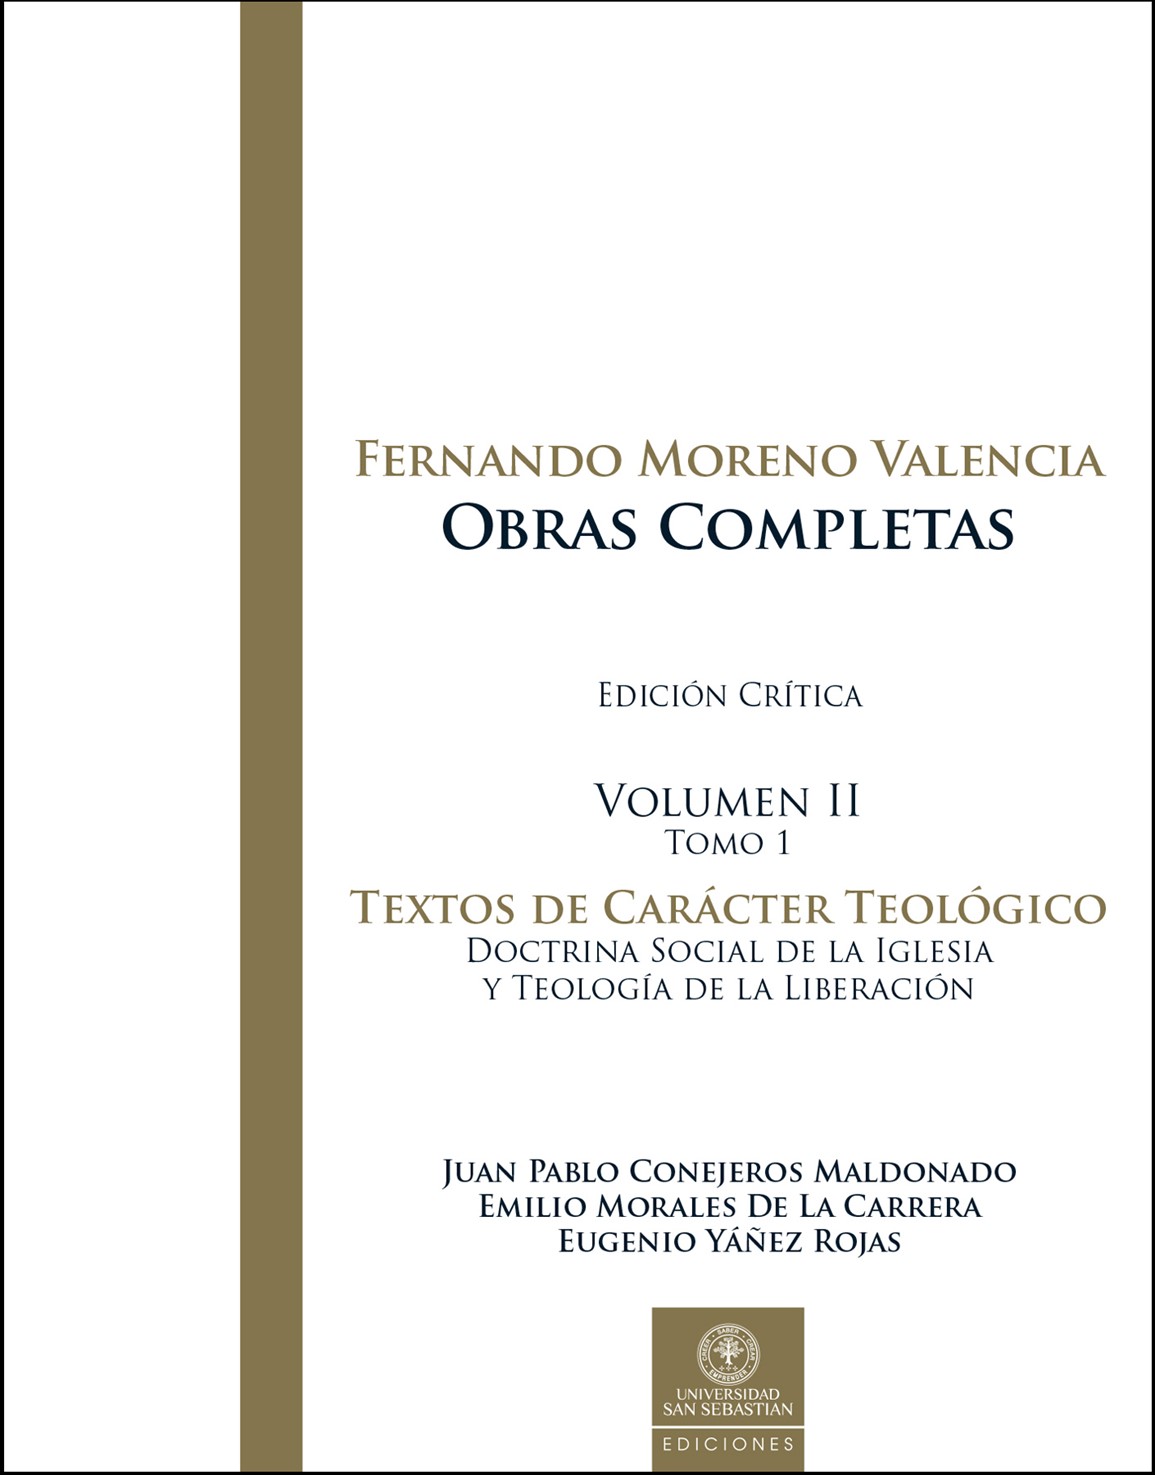 FERNANDO MORENO VALENCIA. OBRAS COMPLETAS. Edición Crítica Volumen II – Tomo 1 TEXTOS DE FILOSOFÍA POLITICA